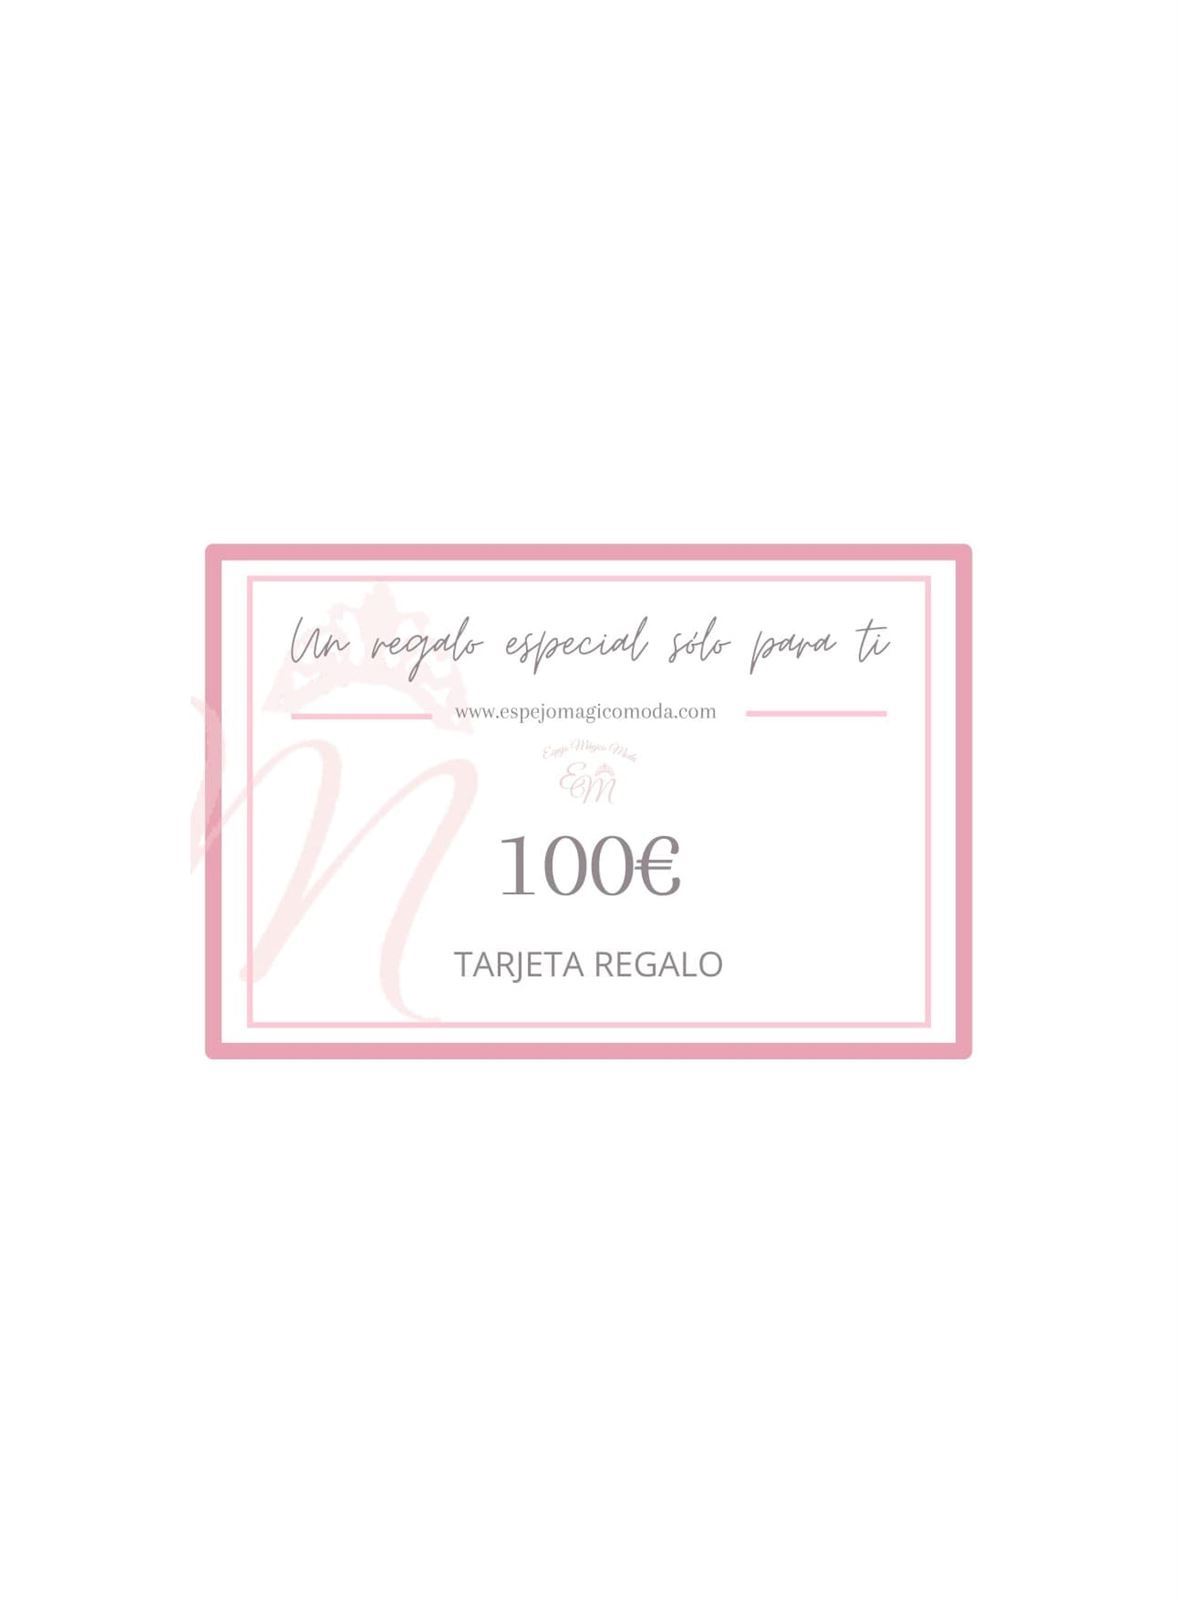 TARJETA REGALO 100€ - Imagen 1